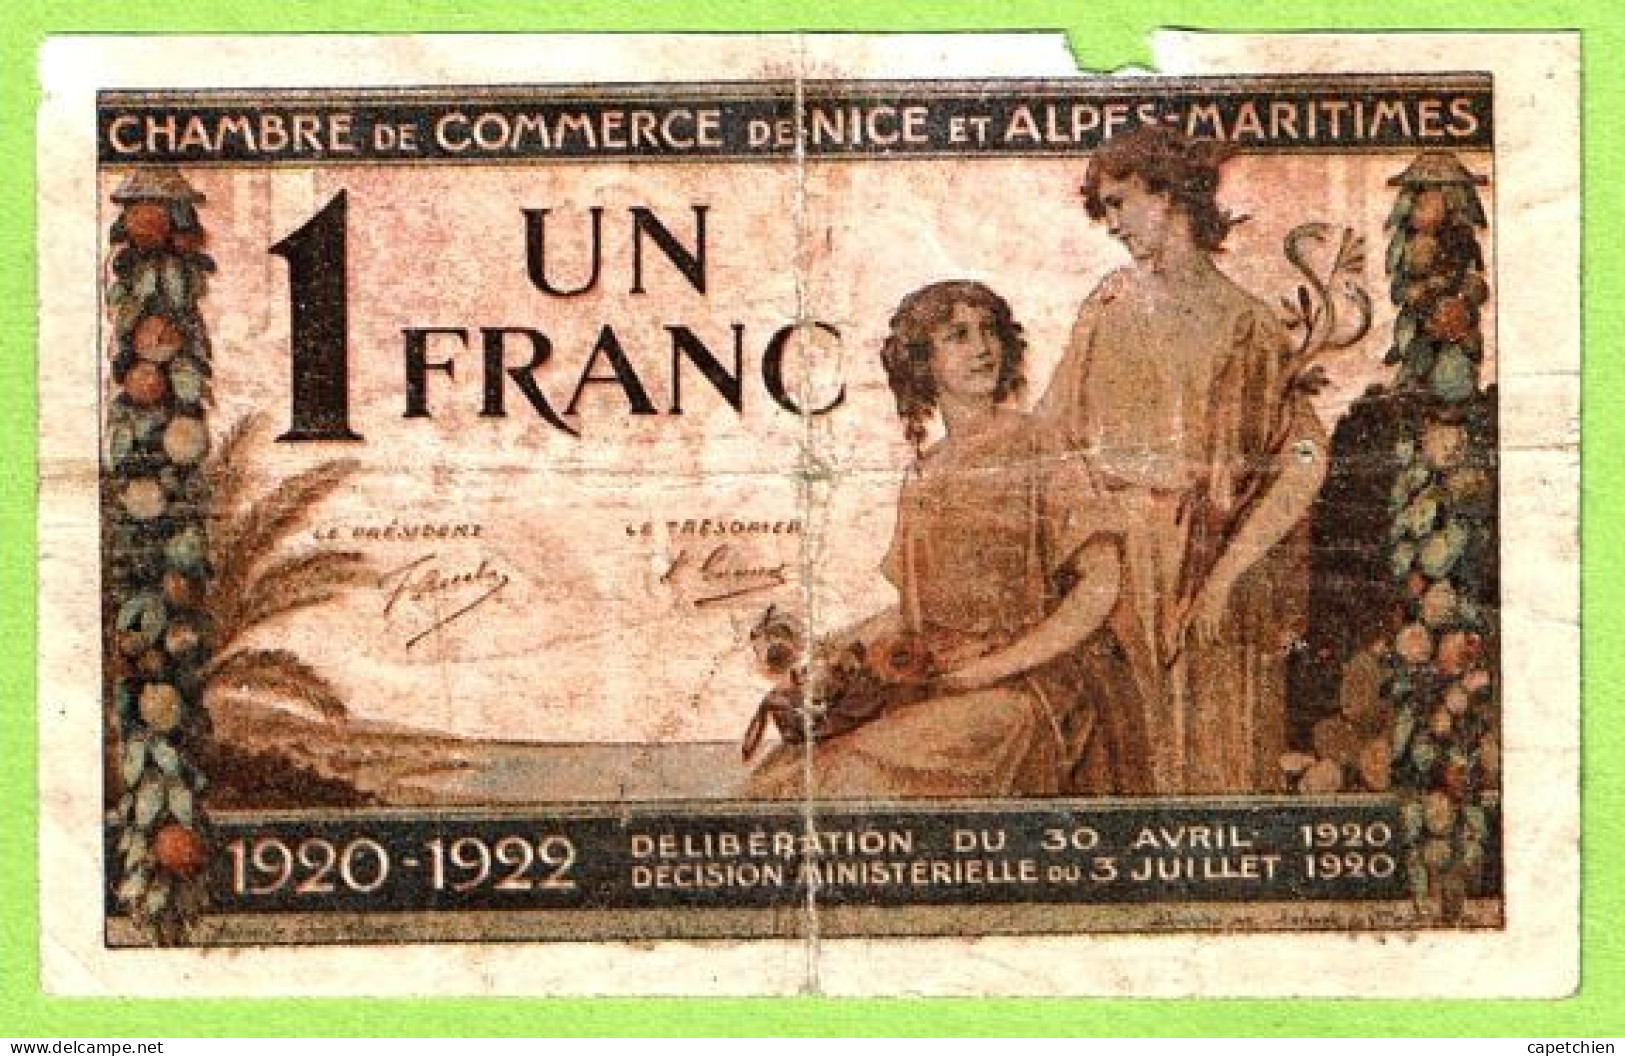 FRANCE / CHAMBRE De COMMERCE / NICE - ALPES MARITIMES / 1 FRANC / 30 AVRIL 1920 / N° 0.023.744 / SERIE 110 - Cámara De Comercio